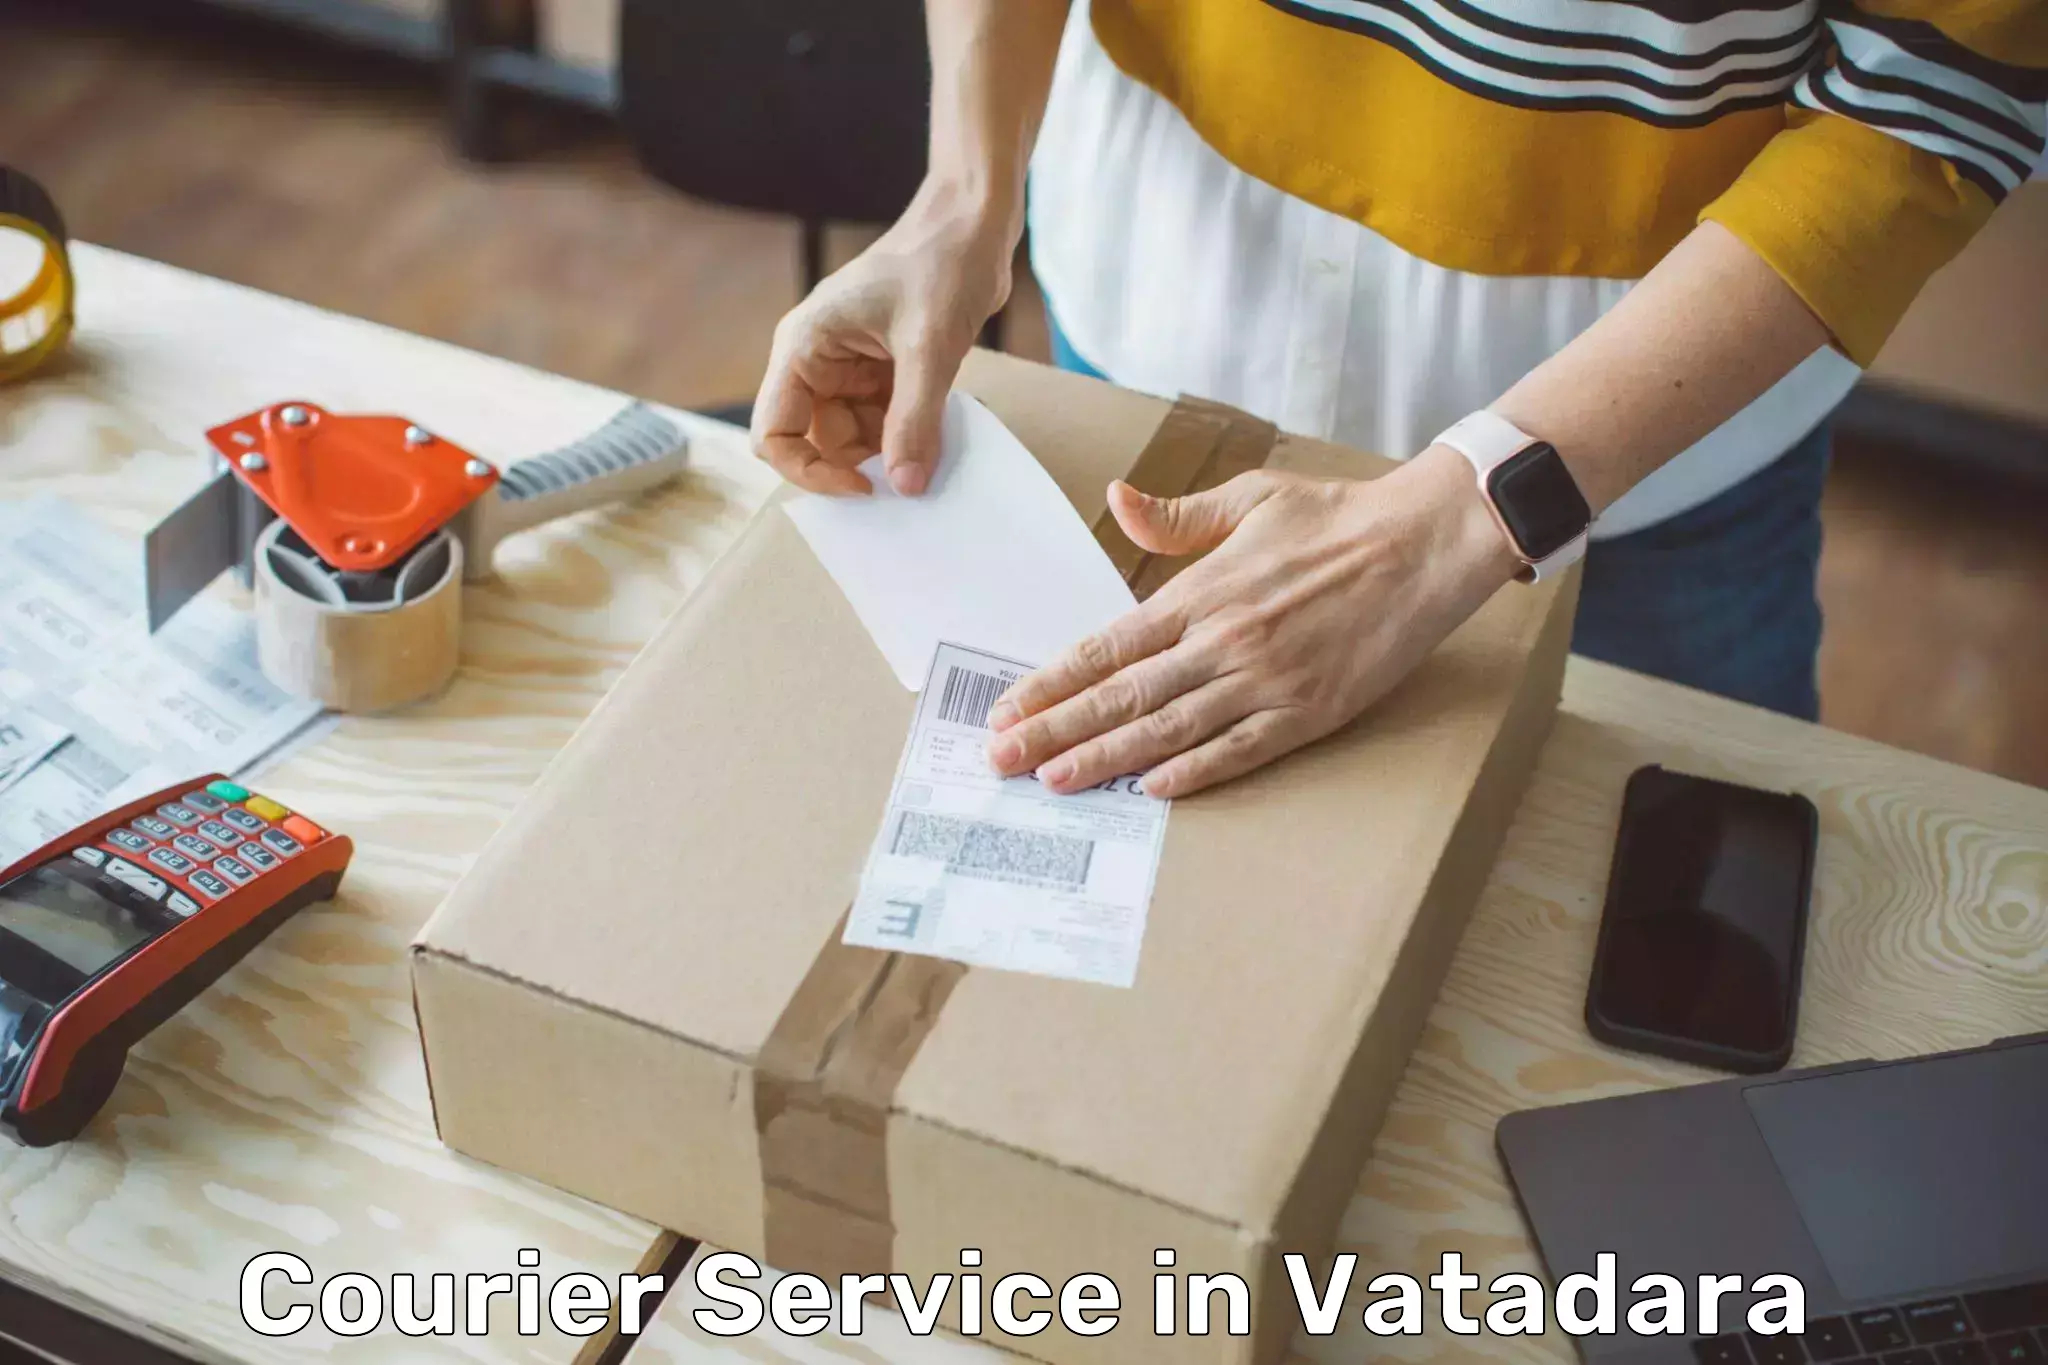 Parcel delivery automation in Vatadara